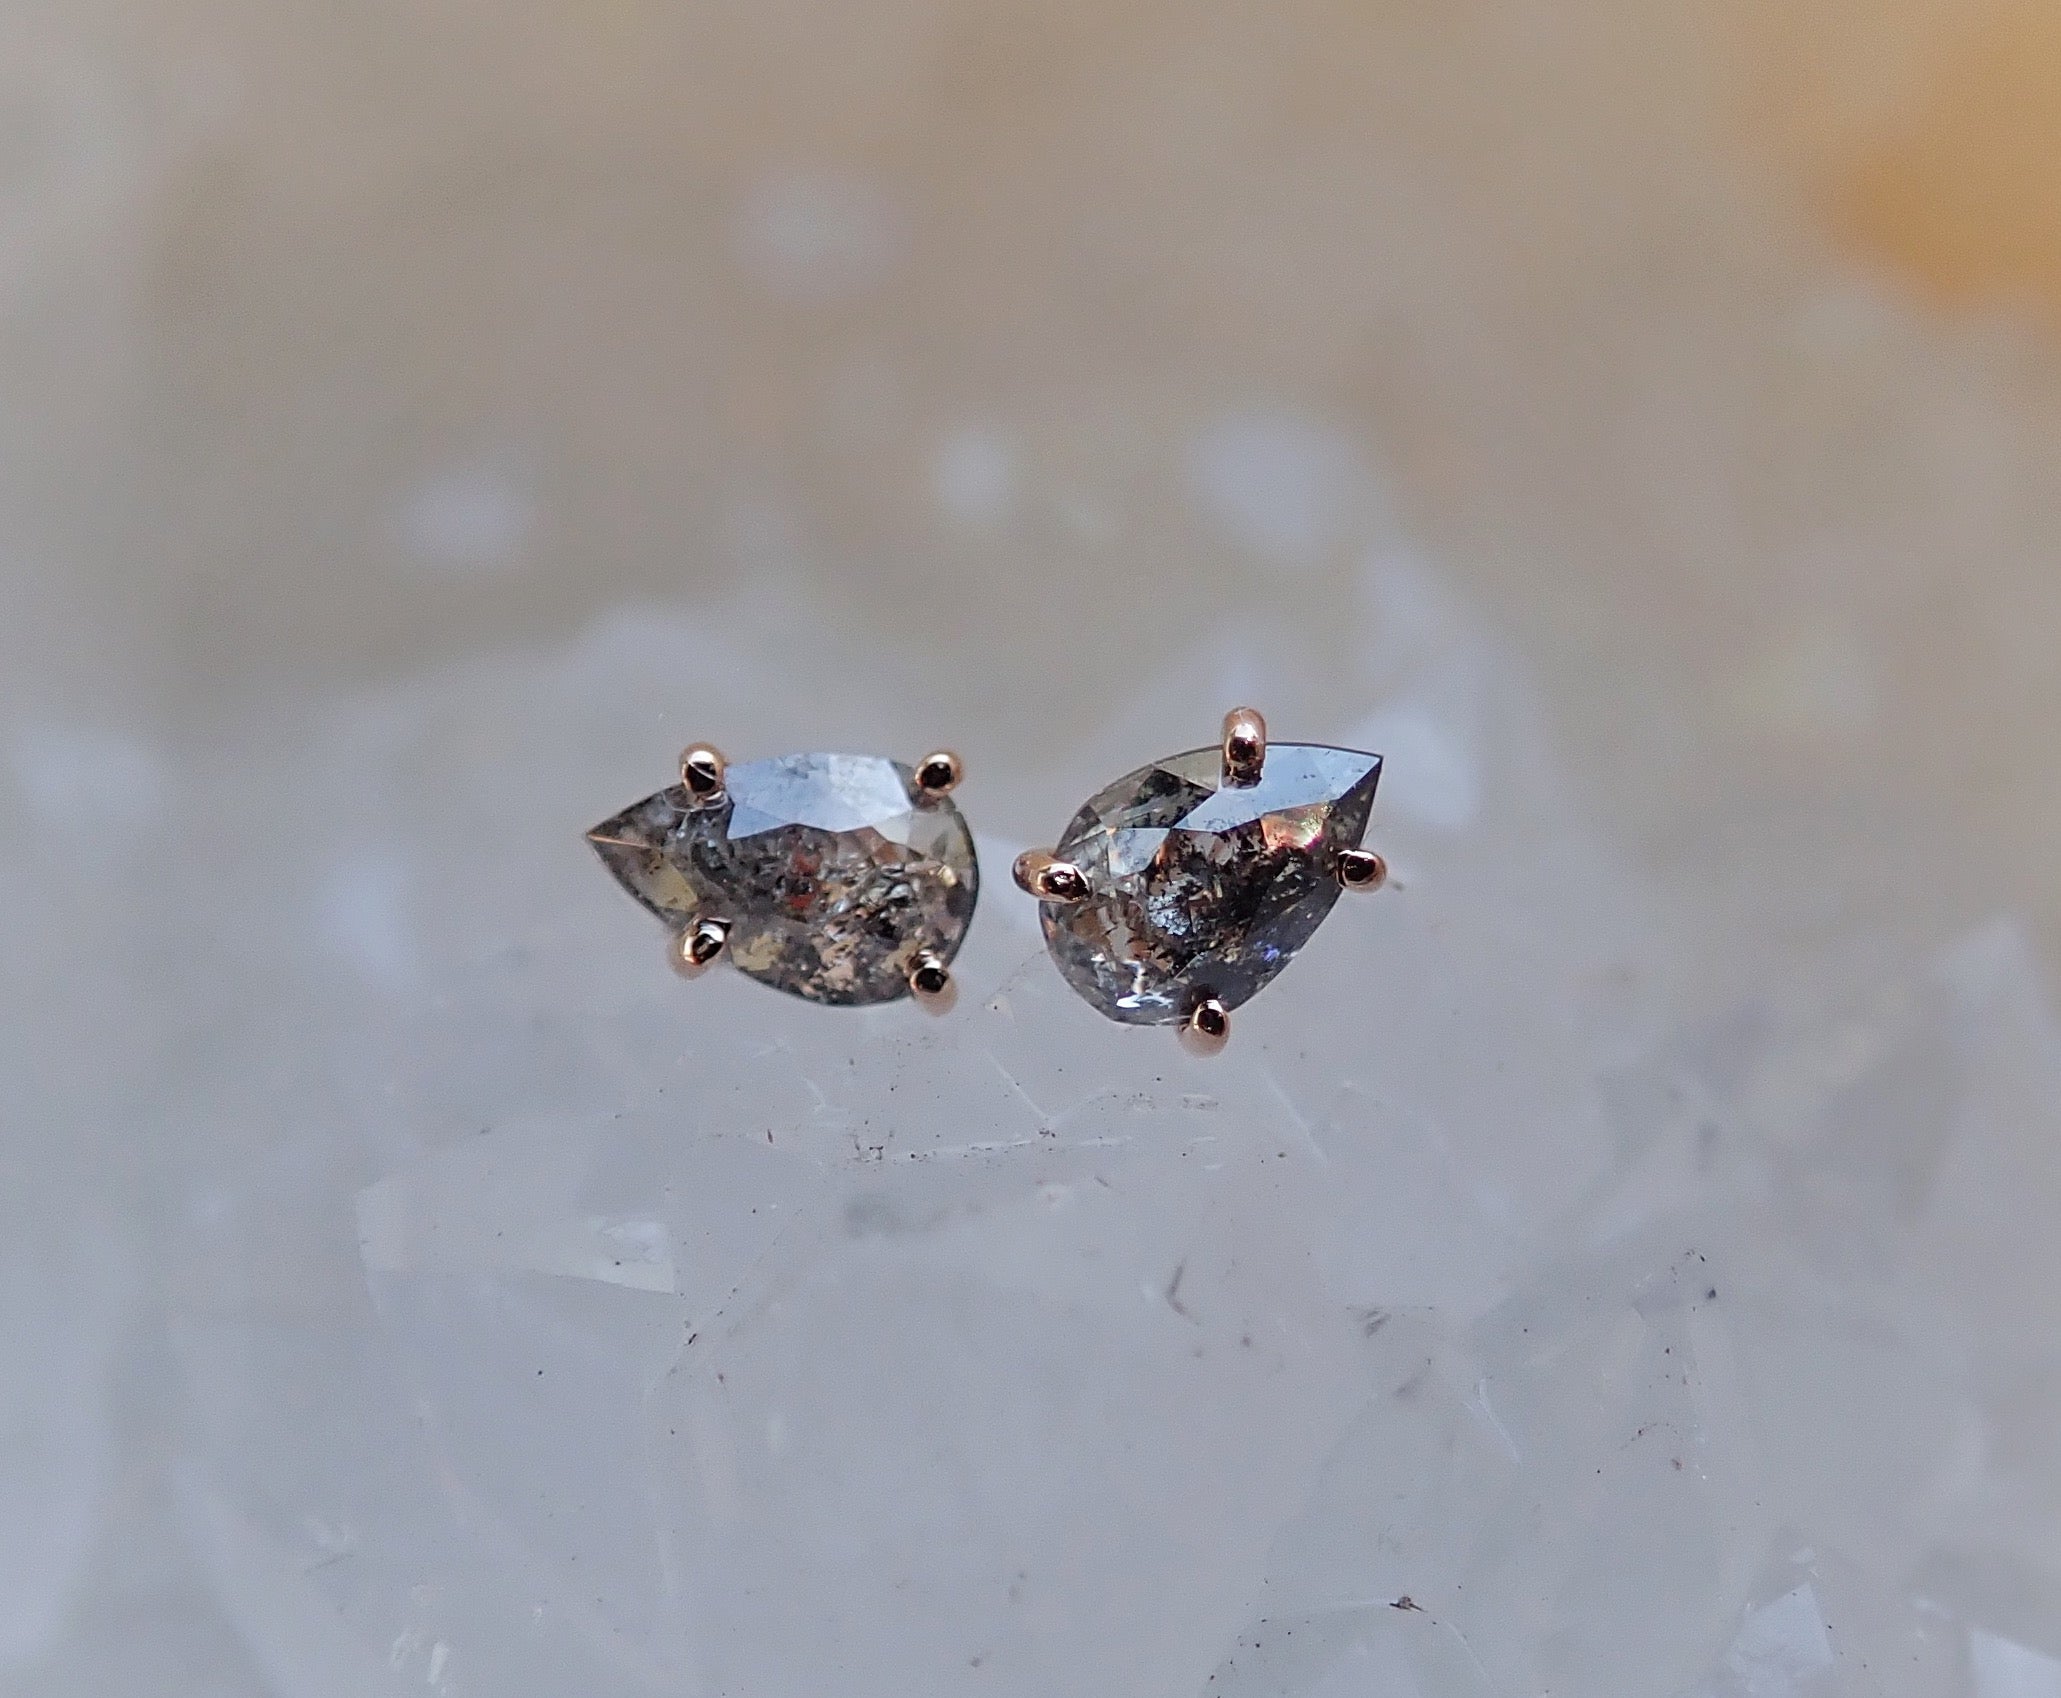 Salt + Pepper Diamond Stud Earrings - mossNstone